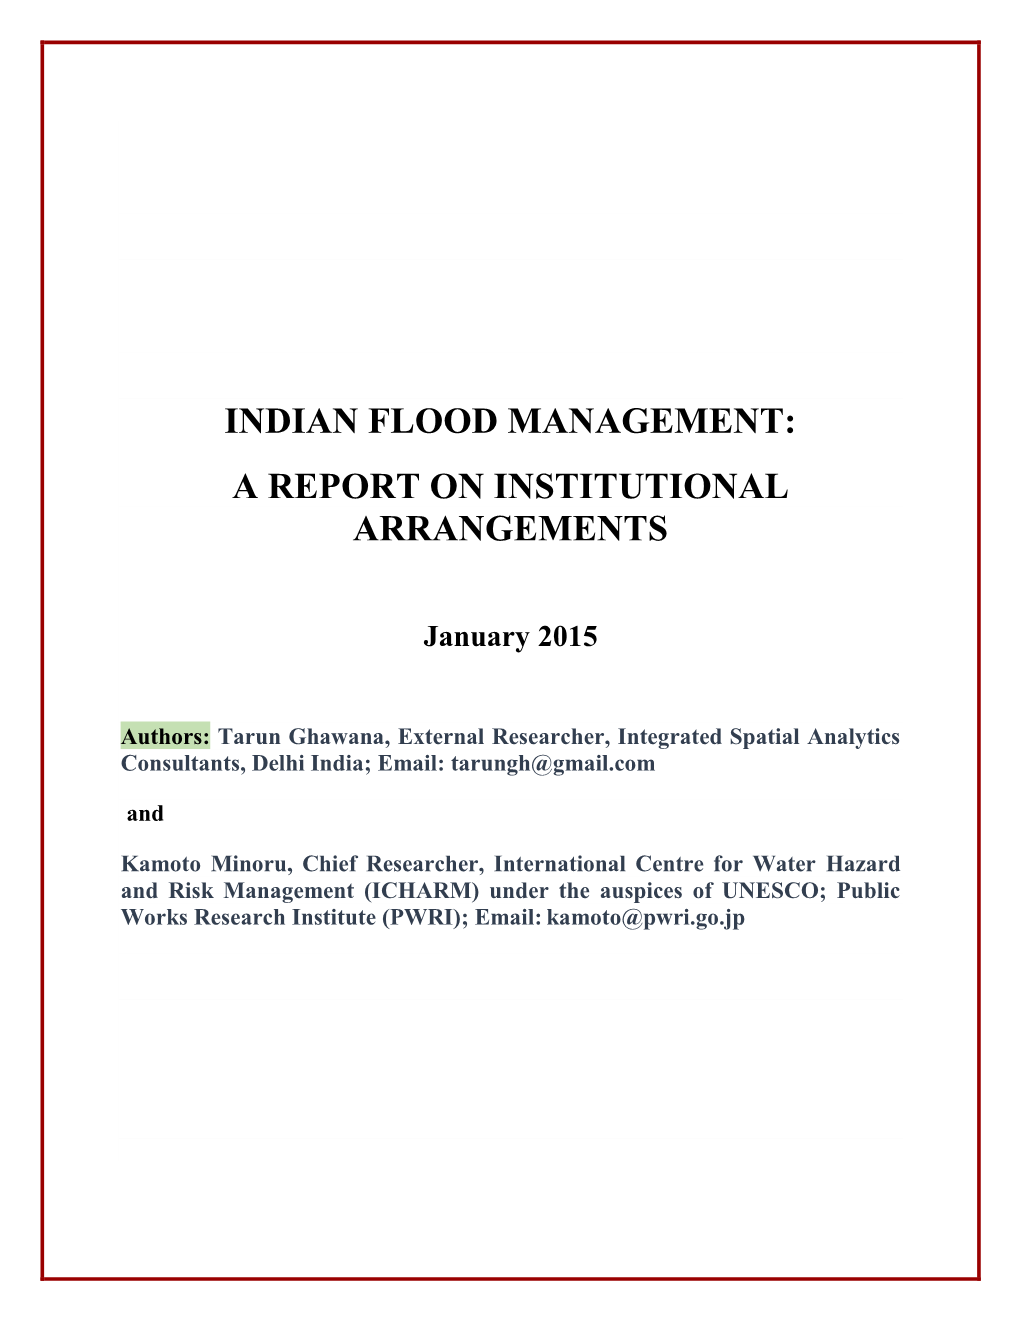 Indian Flood Management: a Report on Institutional Arrangements